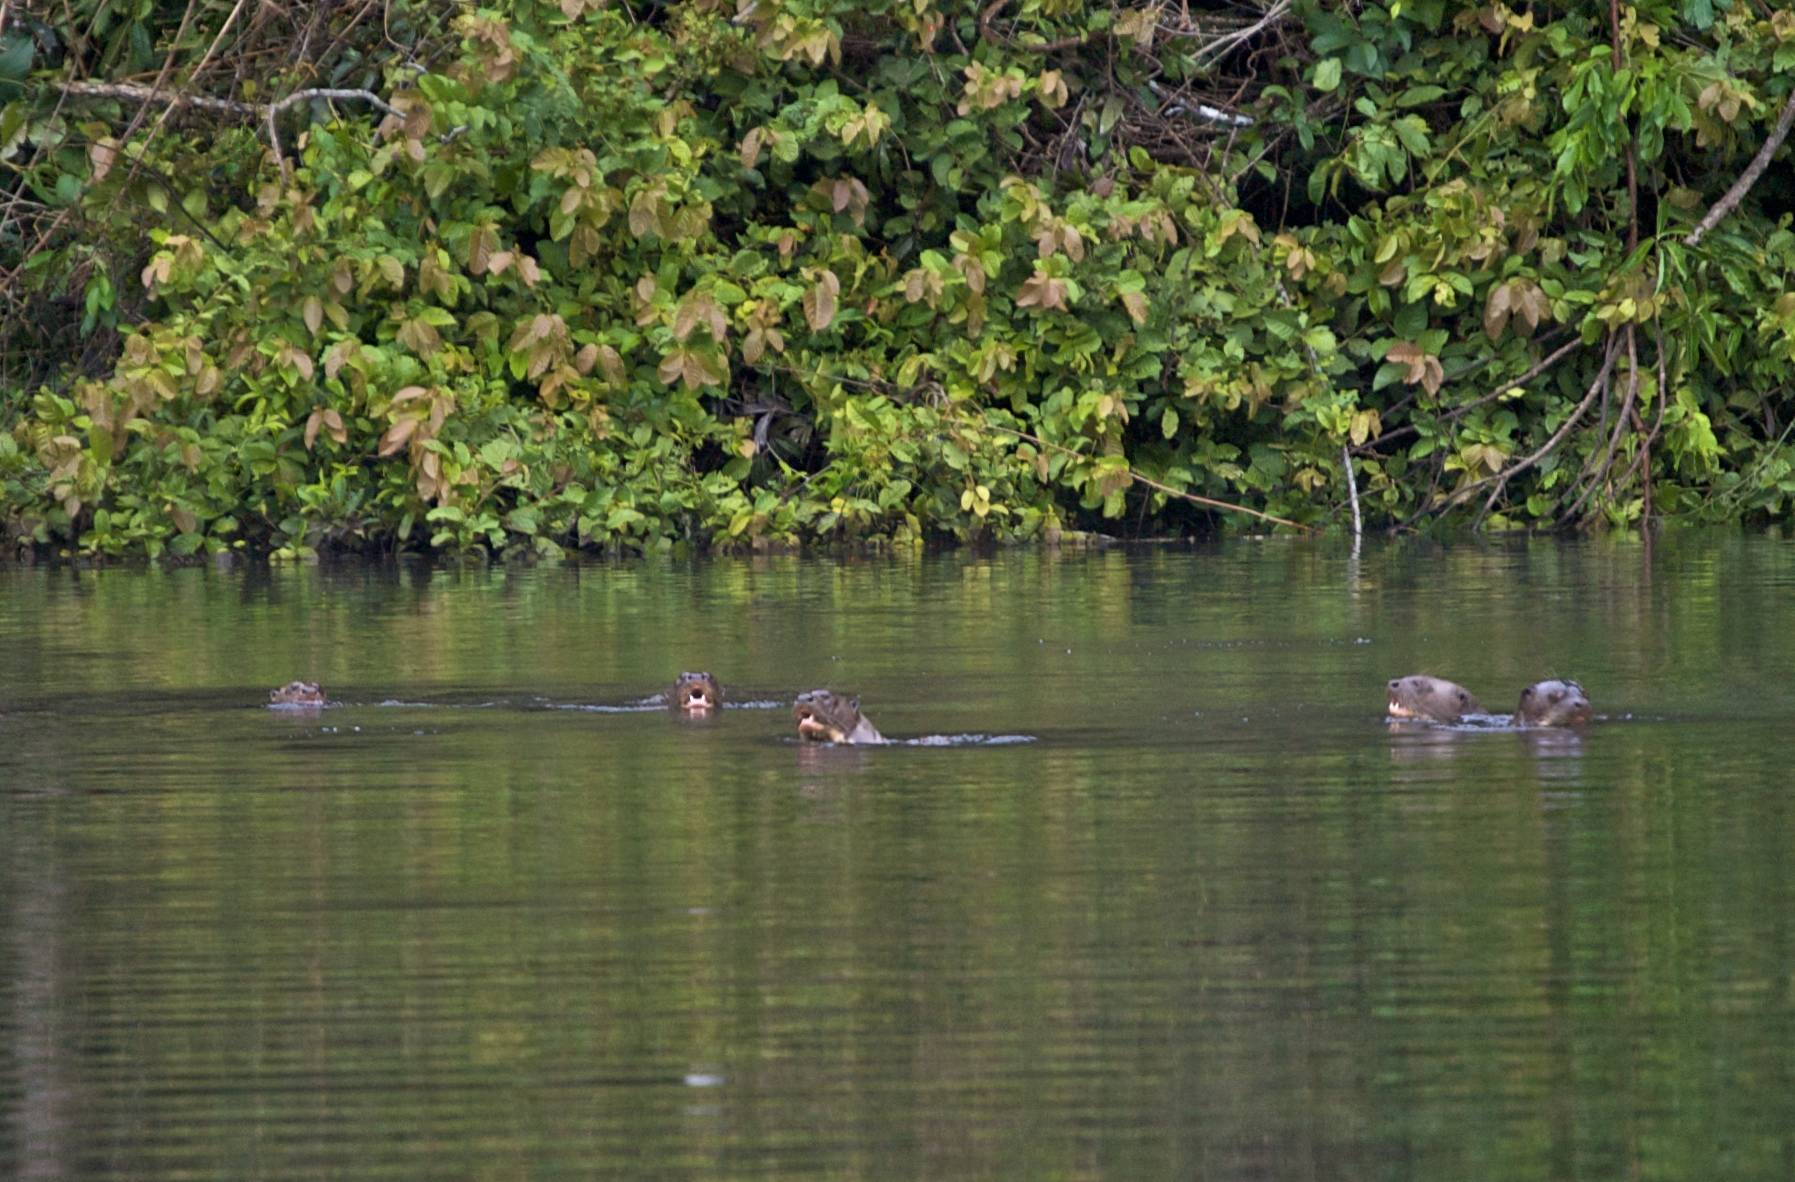 Giant Amazon River Otter fishing